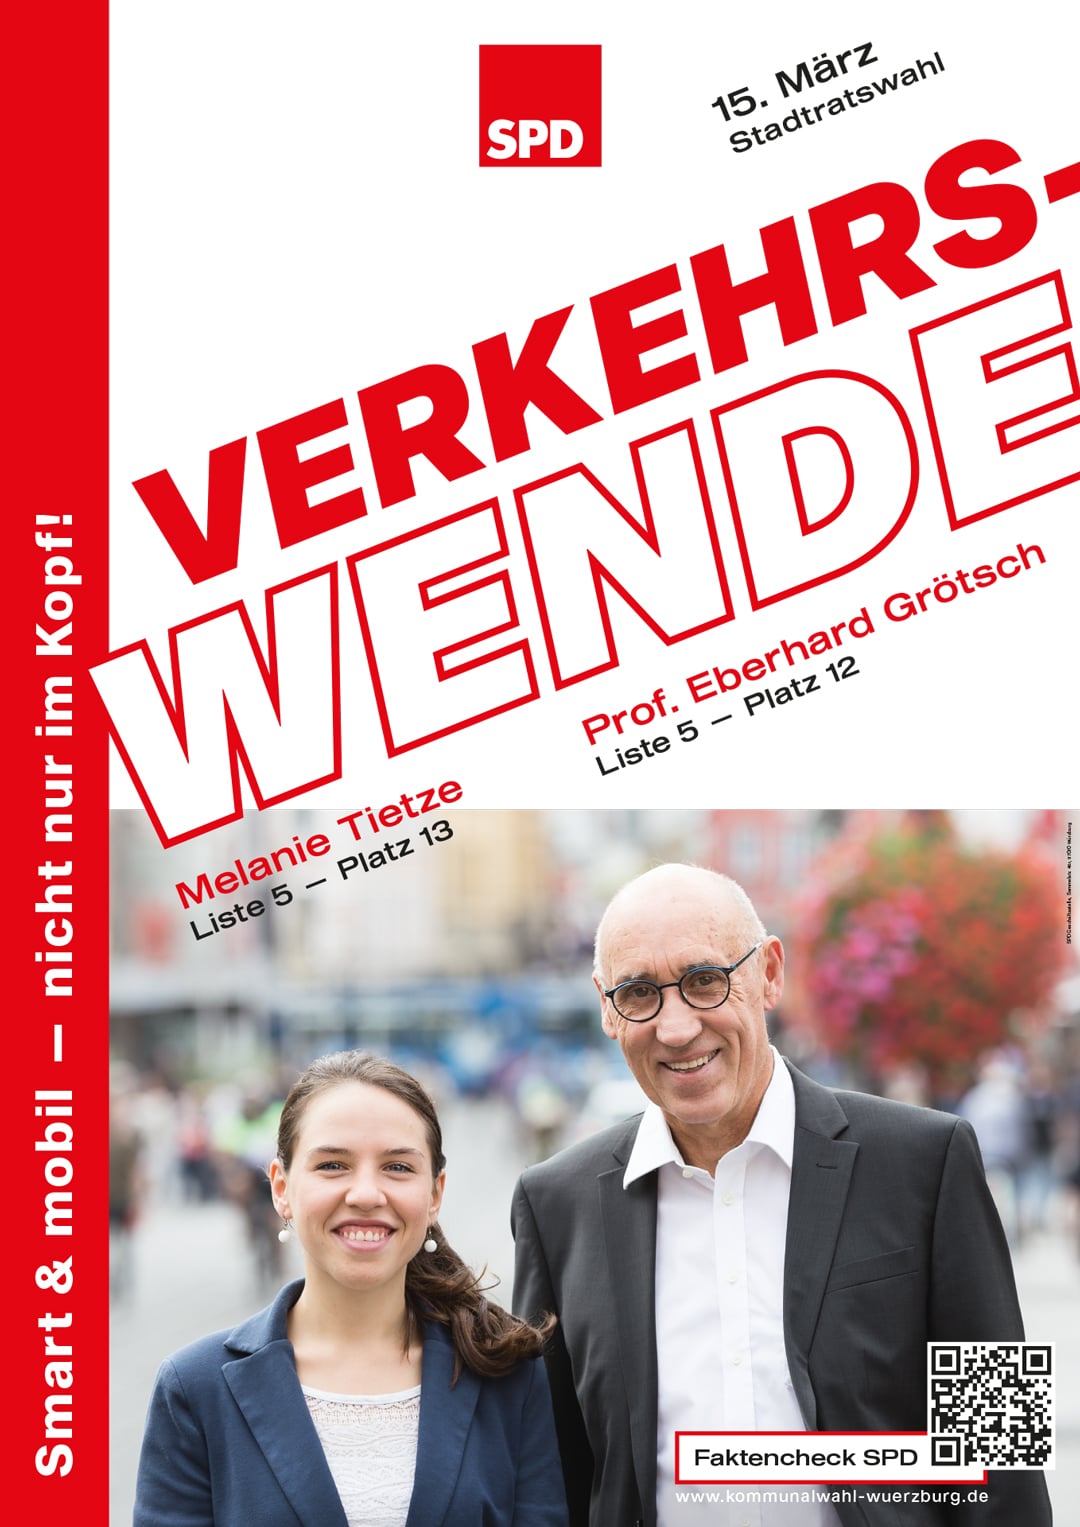 SPD Würzburg Kommunalwahl-Kampagne Design Wahlplakat Verkehrswende